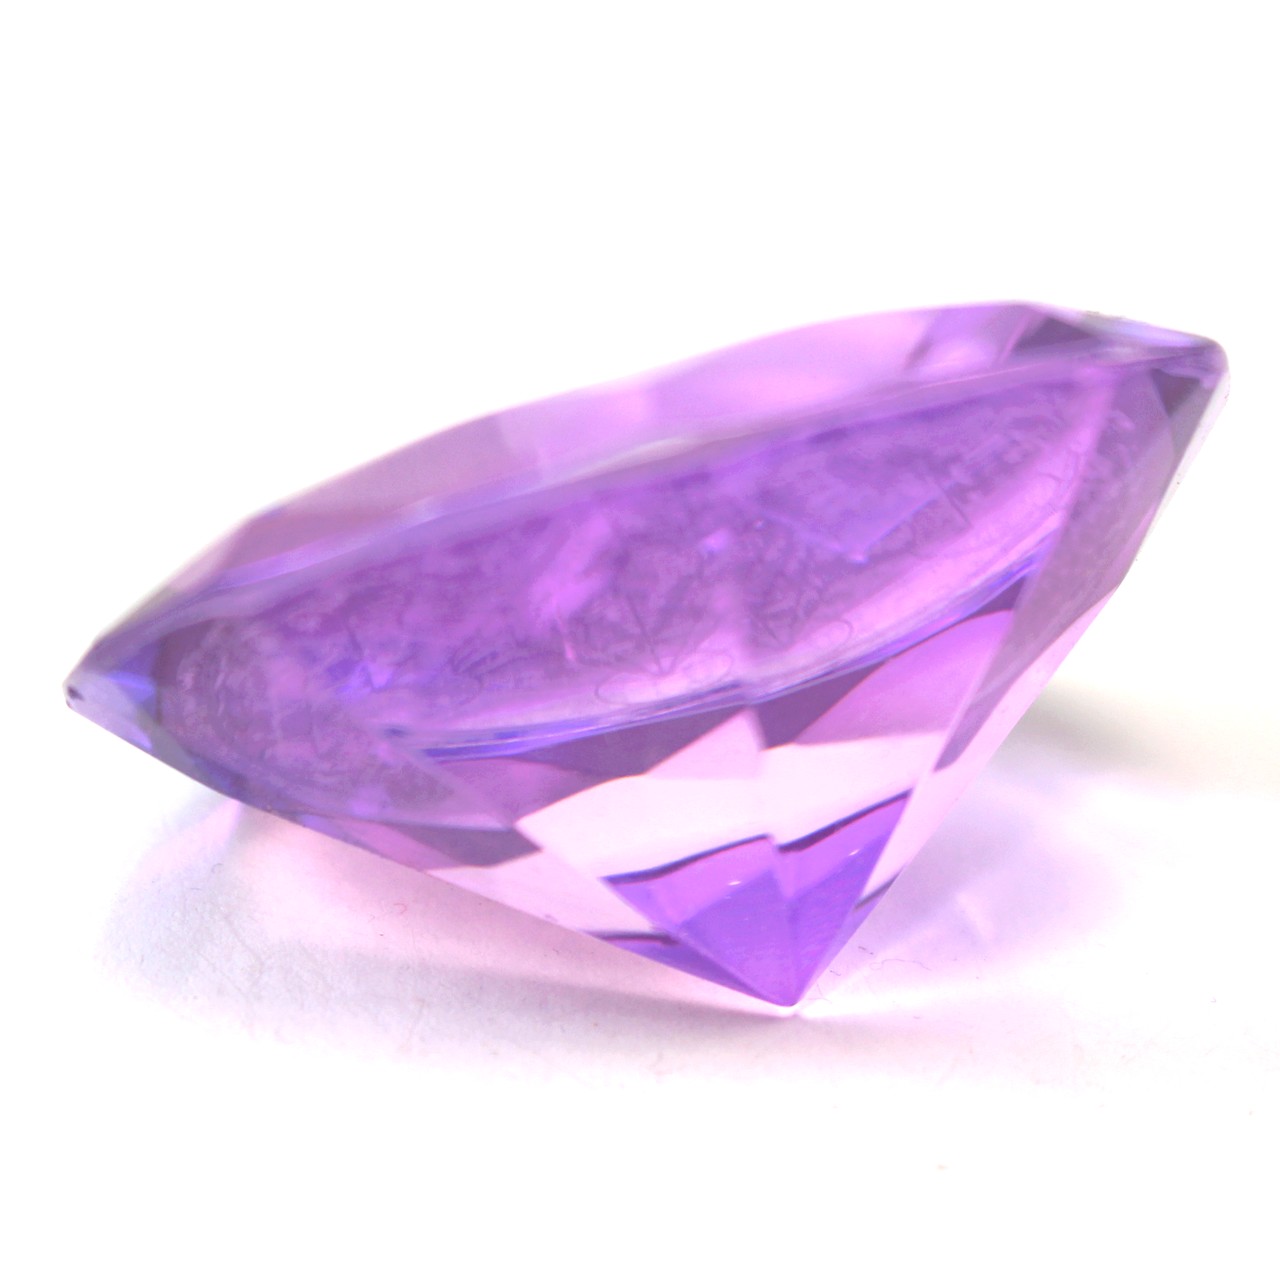 Tachyonen Glas Diamant  Merkaba Violett 45 Energie Heilige Geometrie Zadkiel 7. Chakra